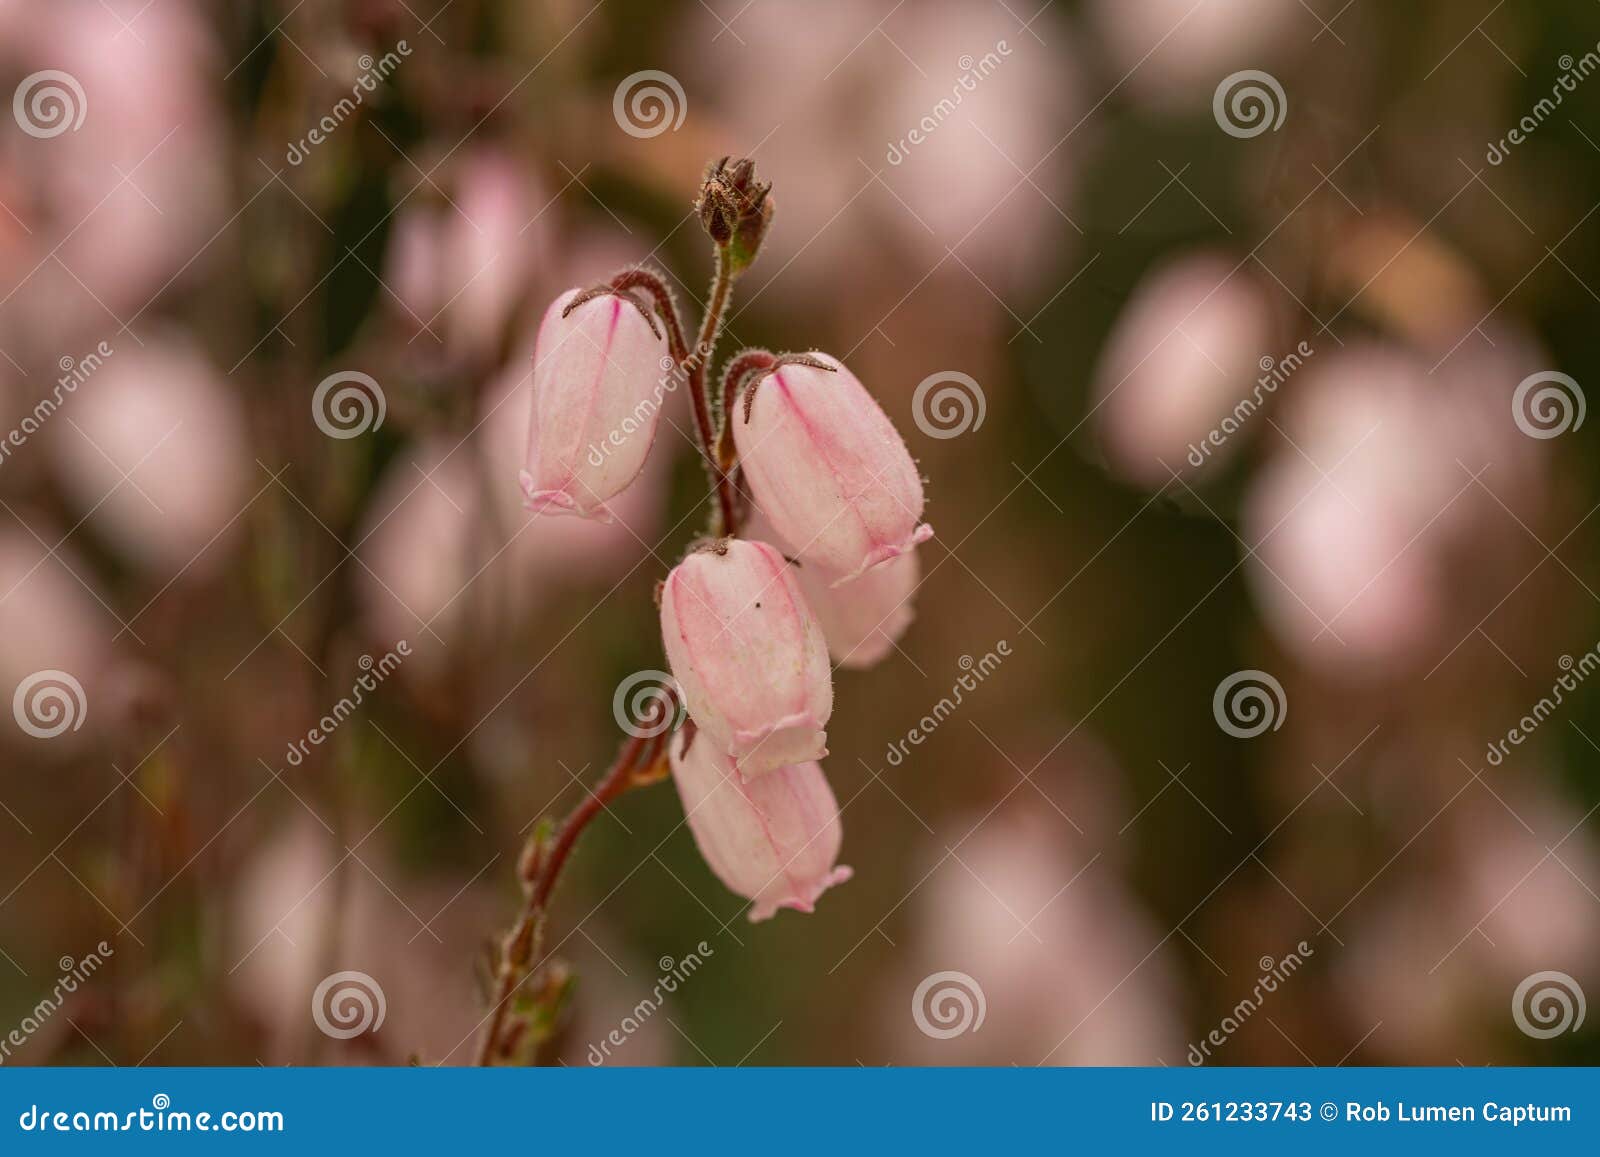 st. dabeocâs heath daboecia cantabrica irish princess, sea of veined pink flowers